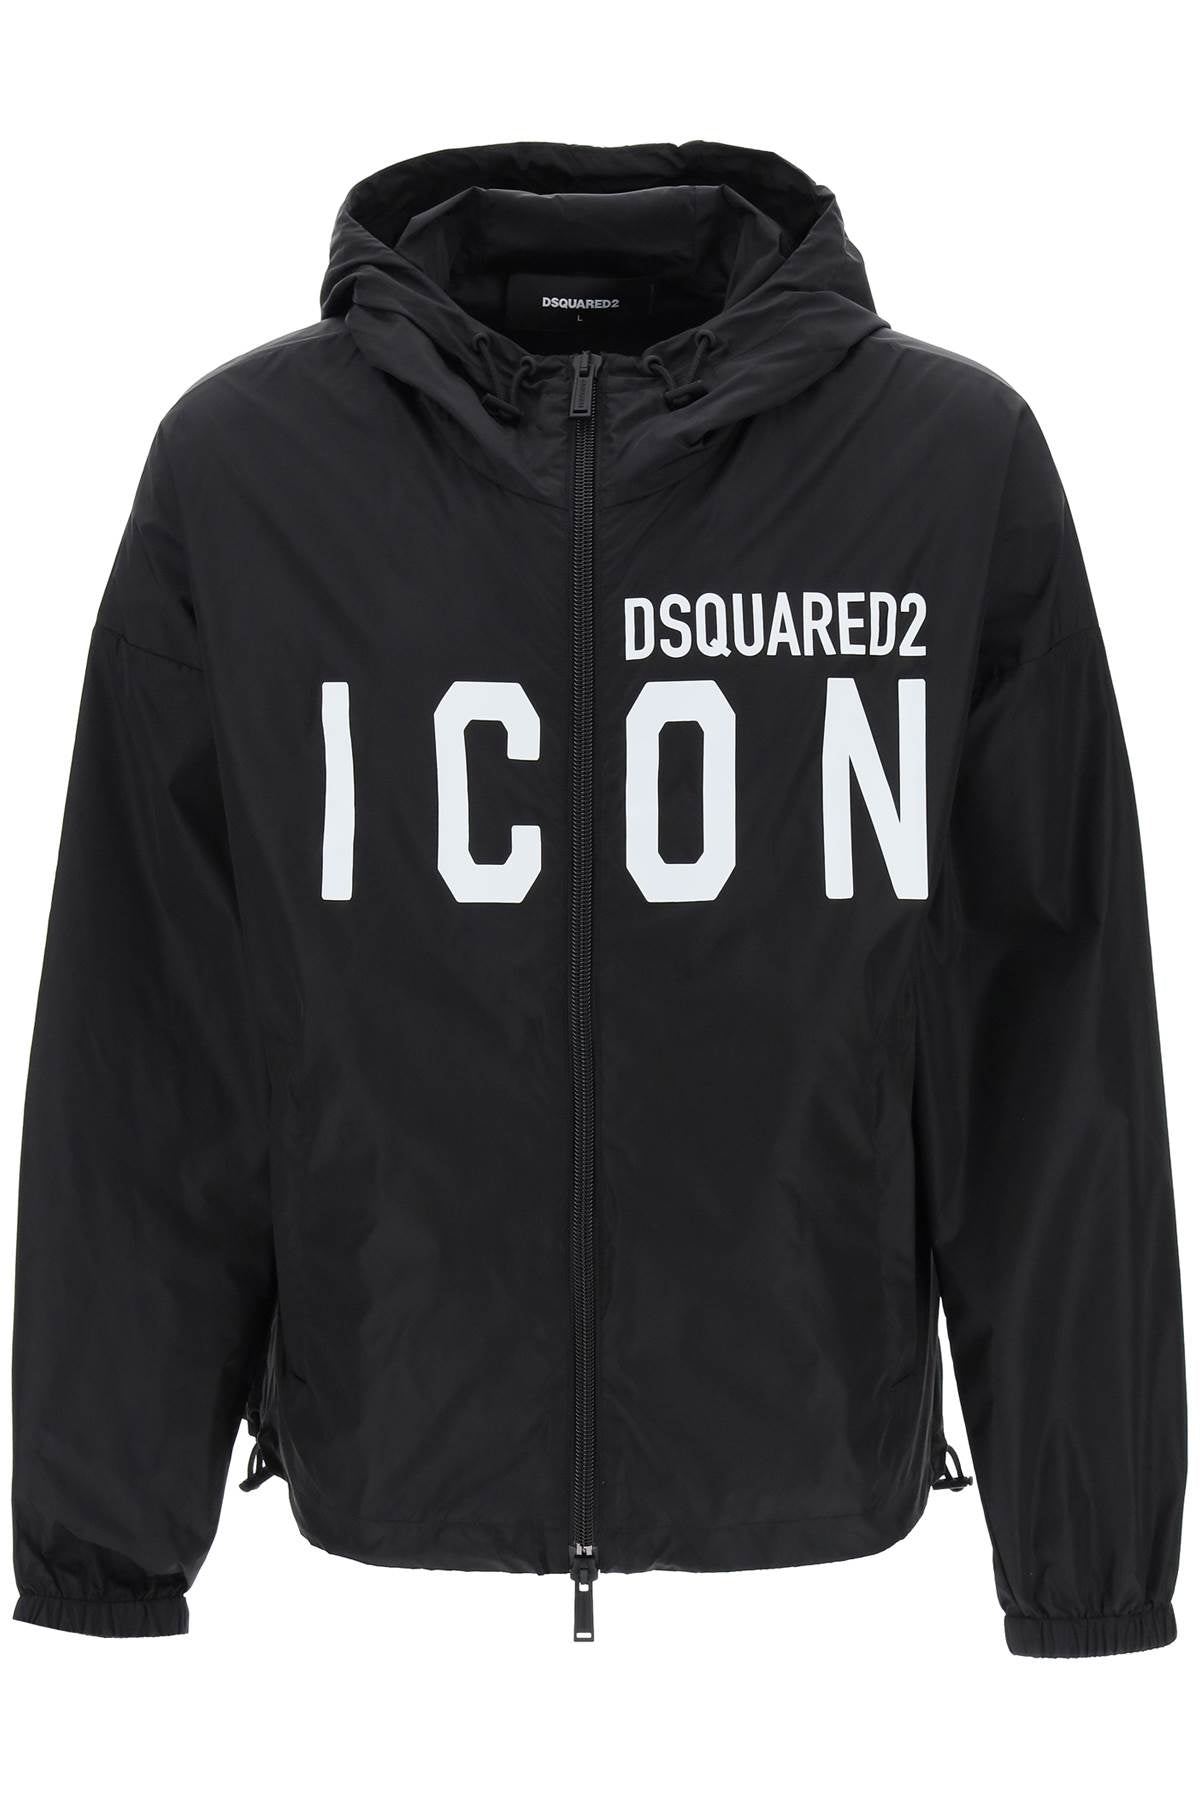 Dsquared2 be icon windbreaker jacket-0